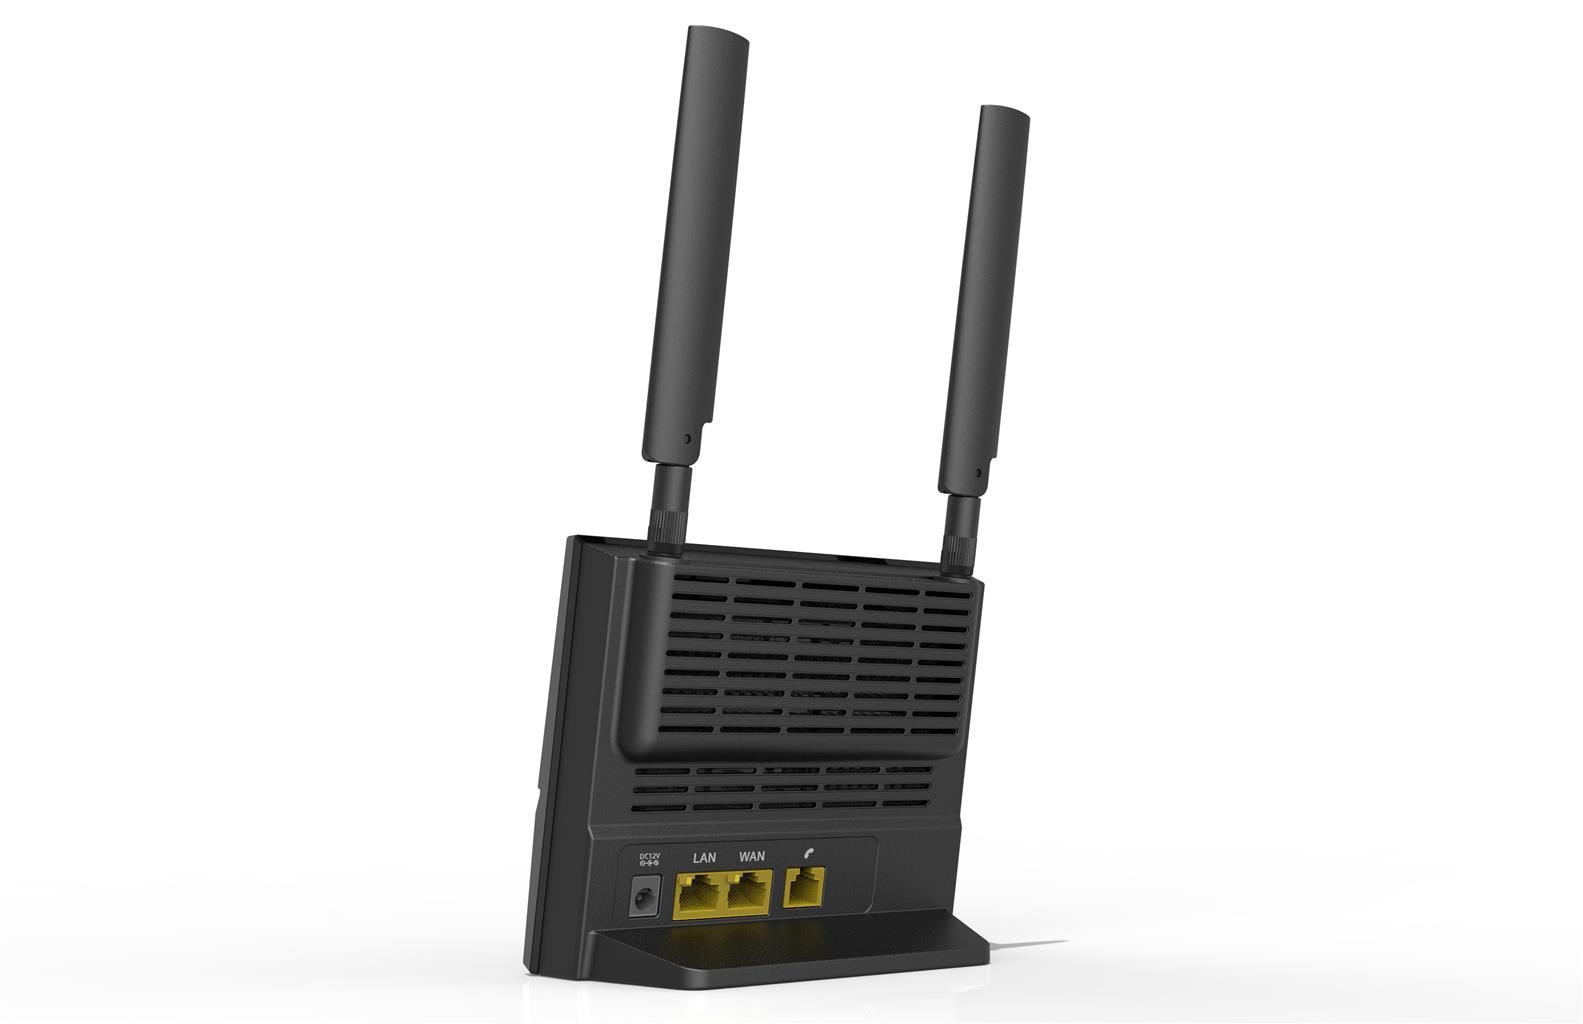 LTE Advanced  Cat 6 CA Router by Belotech